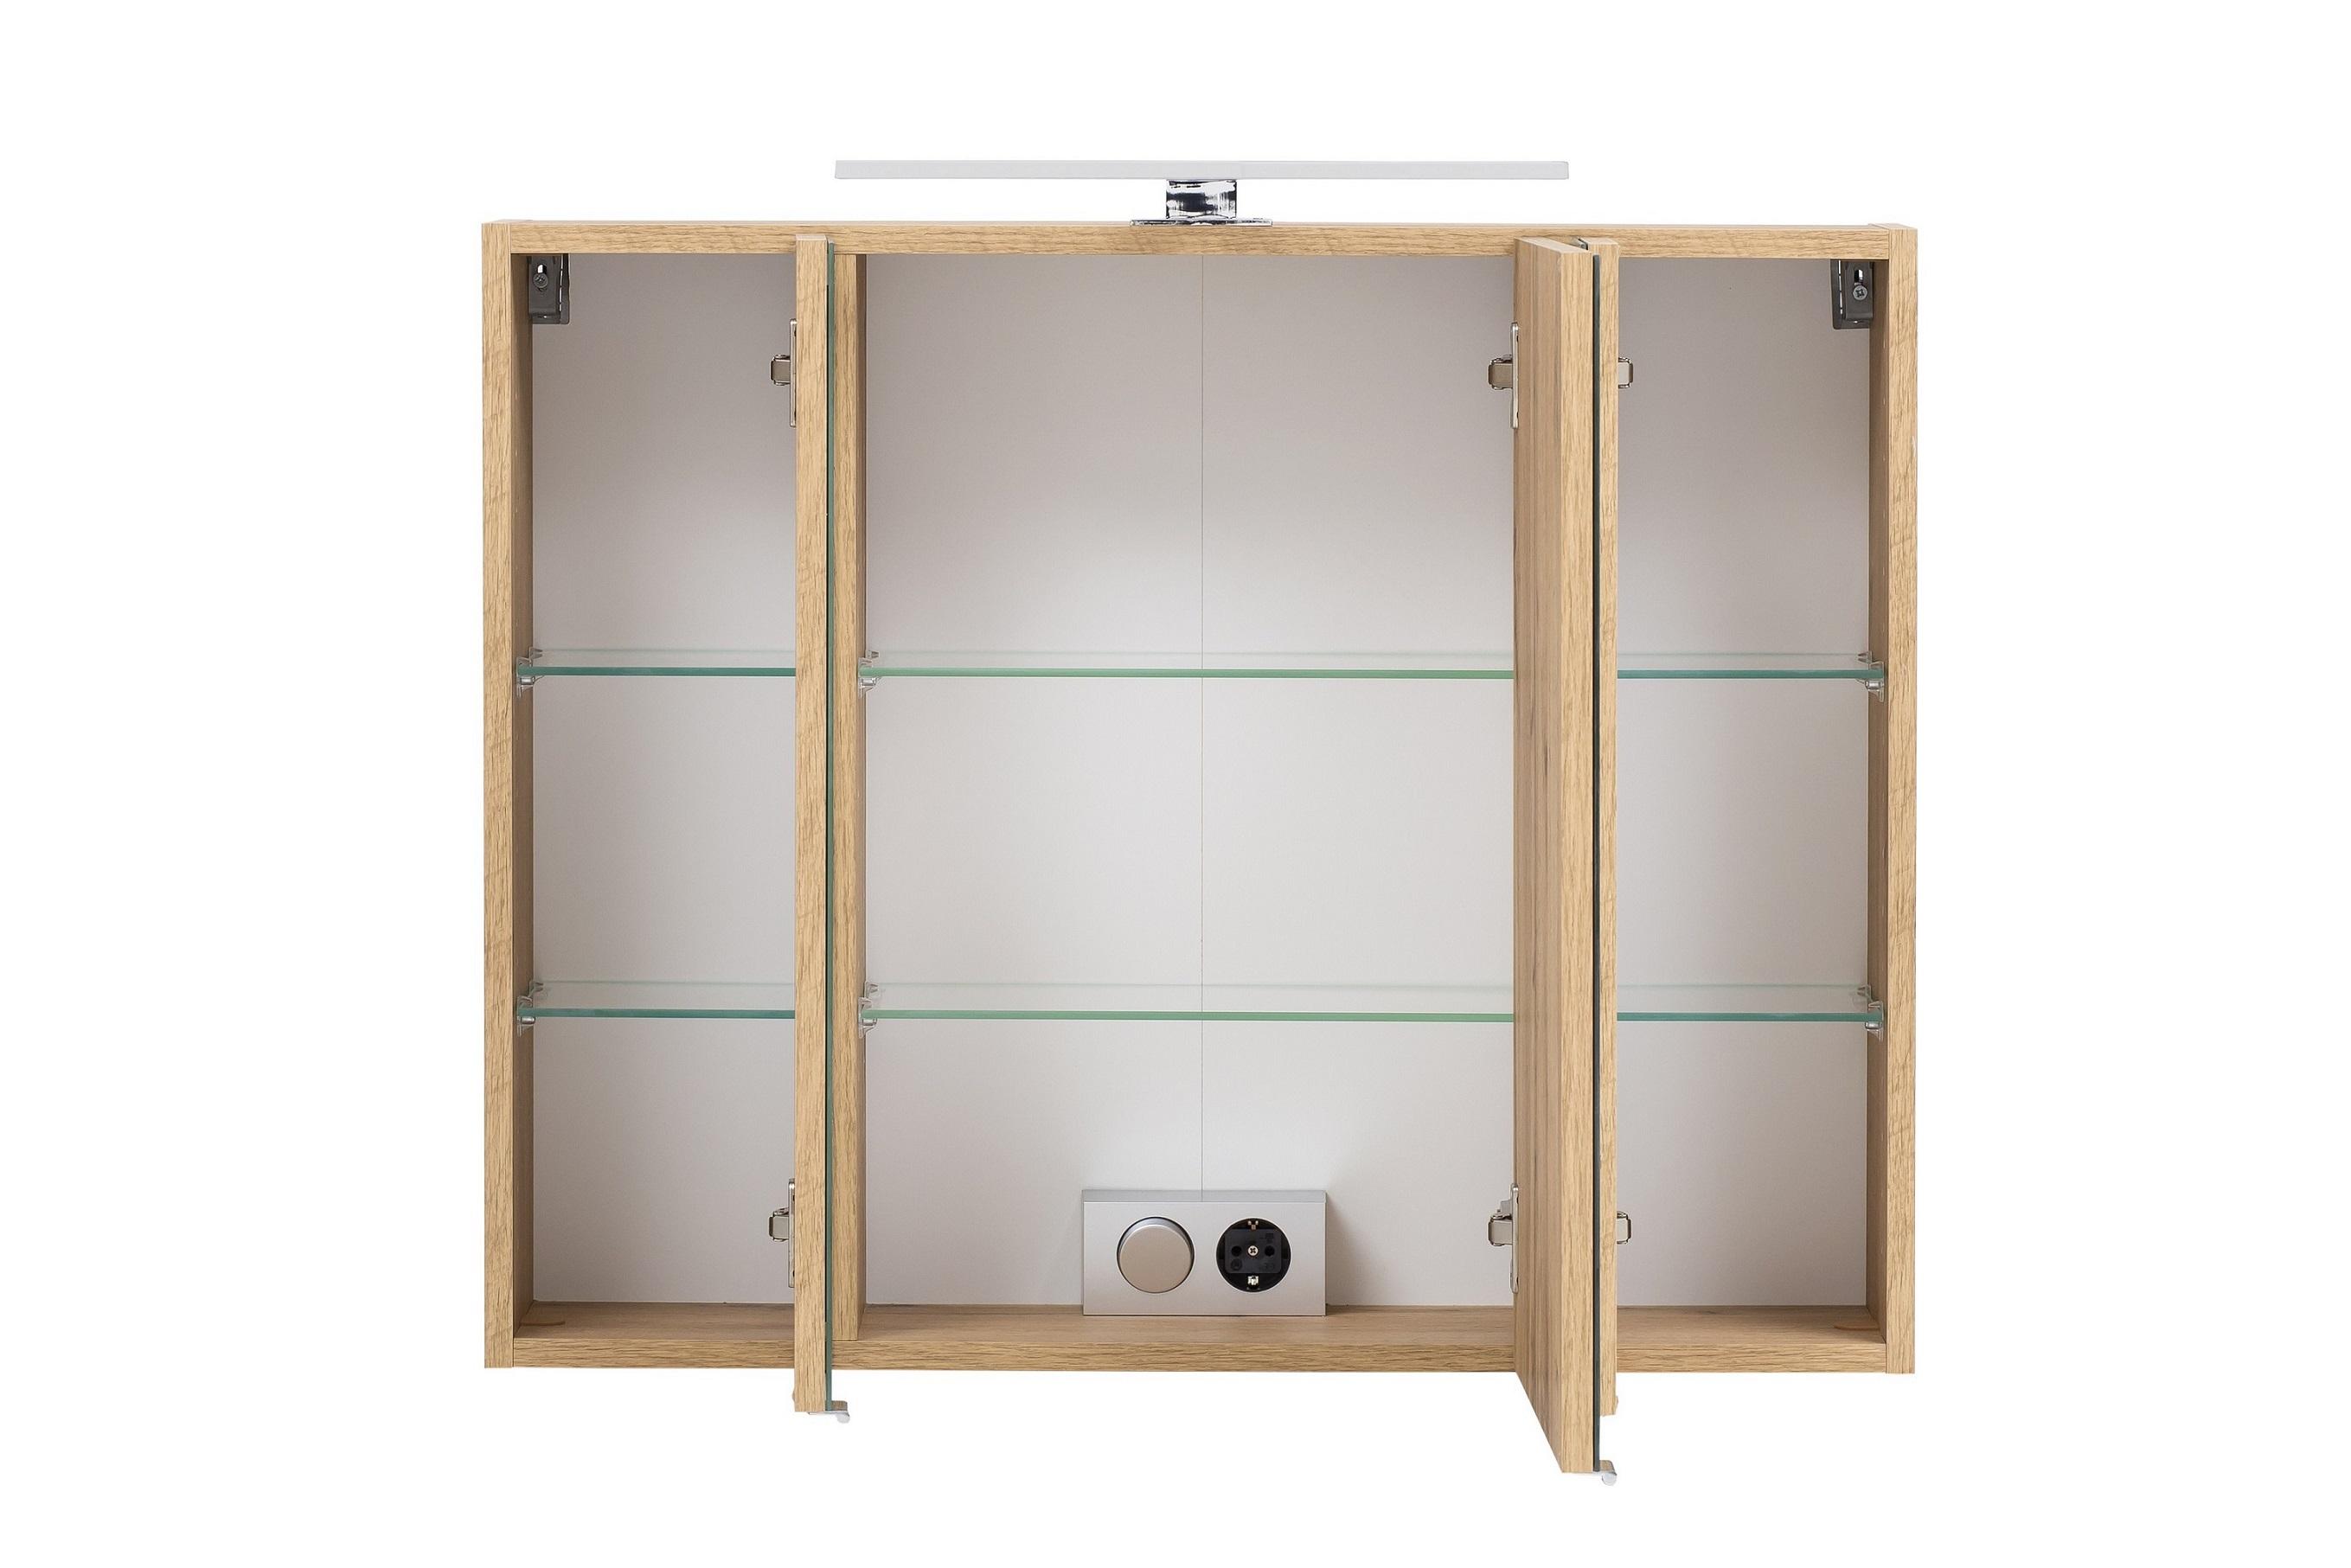 Stauraum in trendy Design: Badezimmer-Set HELSINKI